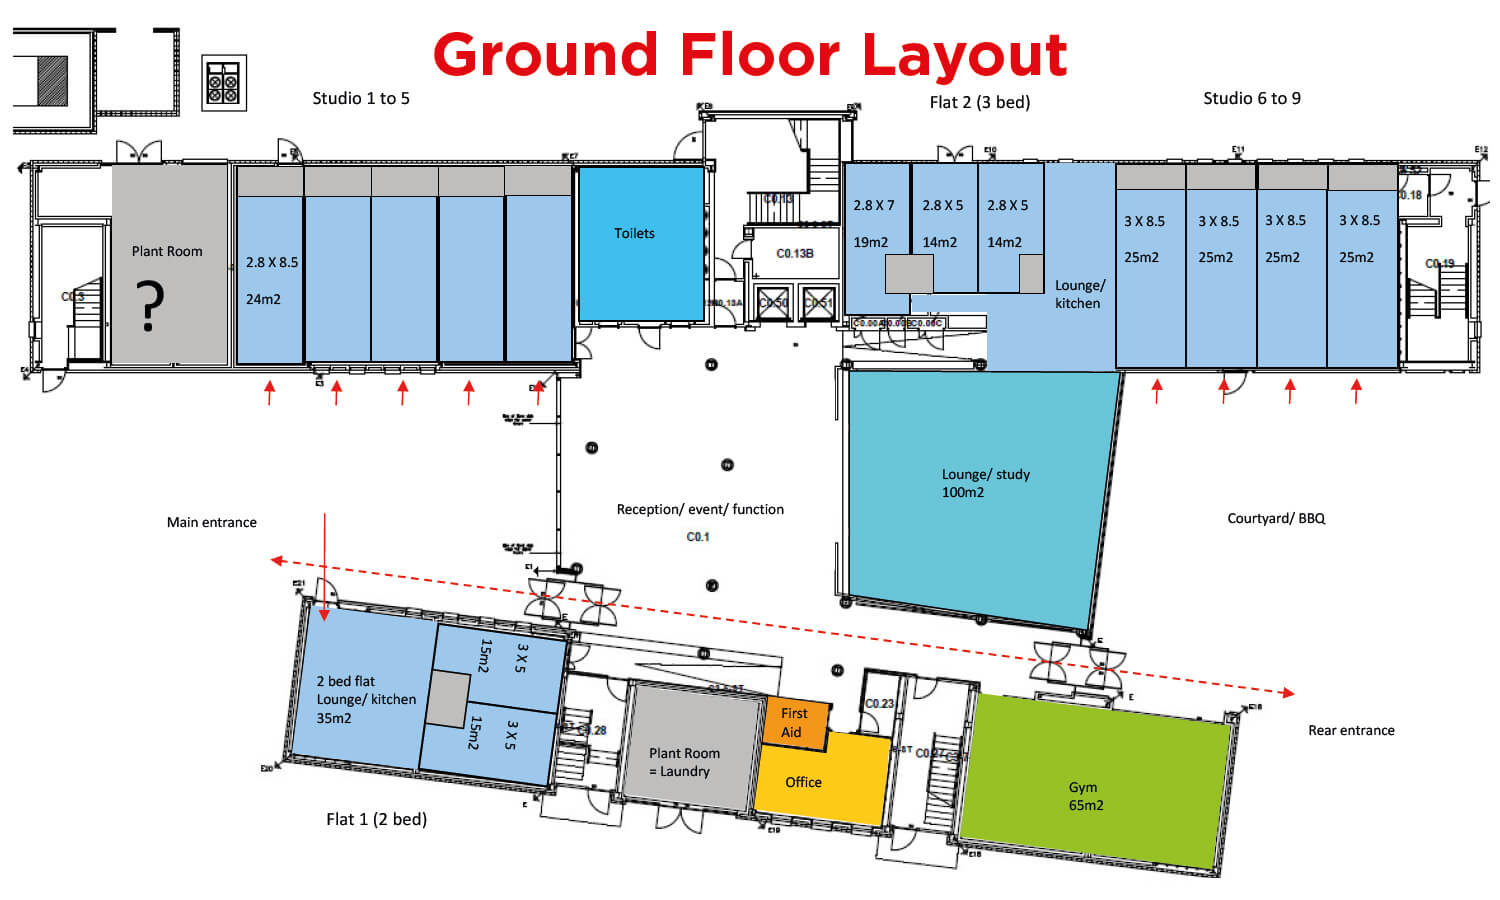 Soab Ground Floor Layout